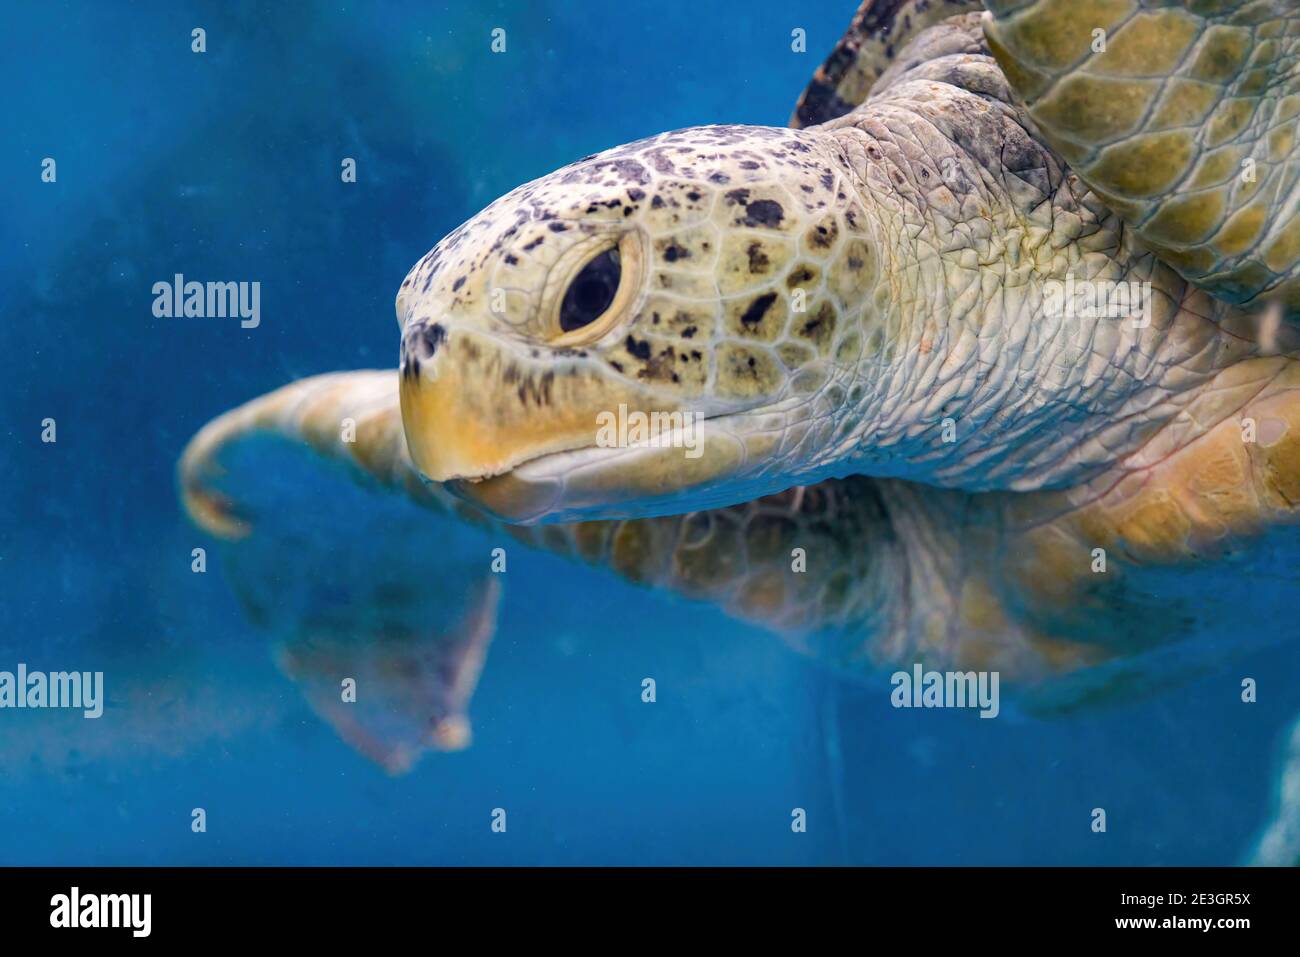 Close-up of a giant sea turtle, marine life Stock Photo